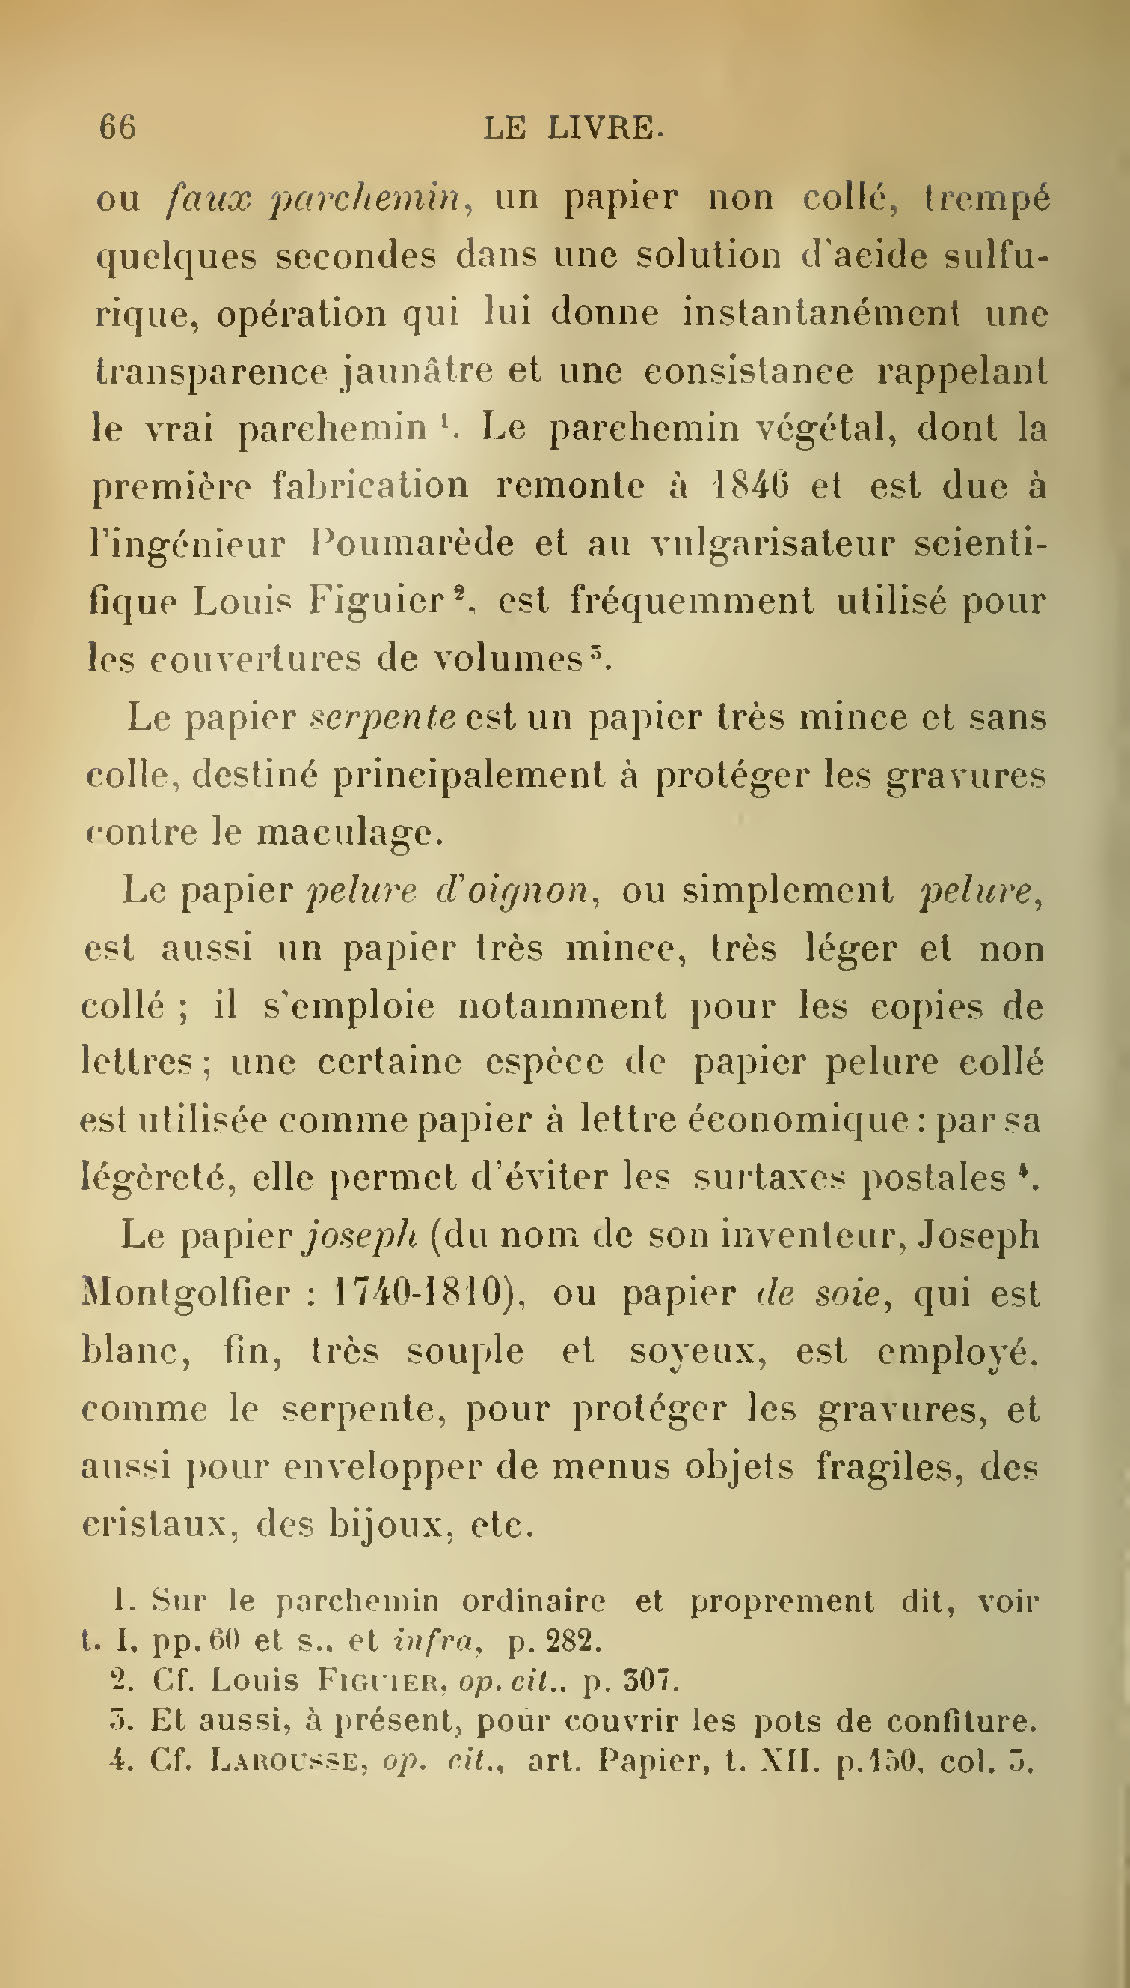 Albert Cim, Le Livre, t. III, p. 66.